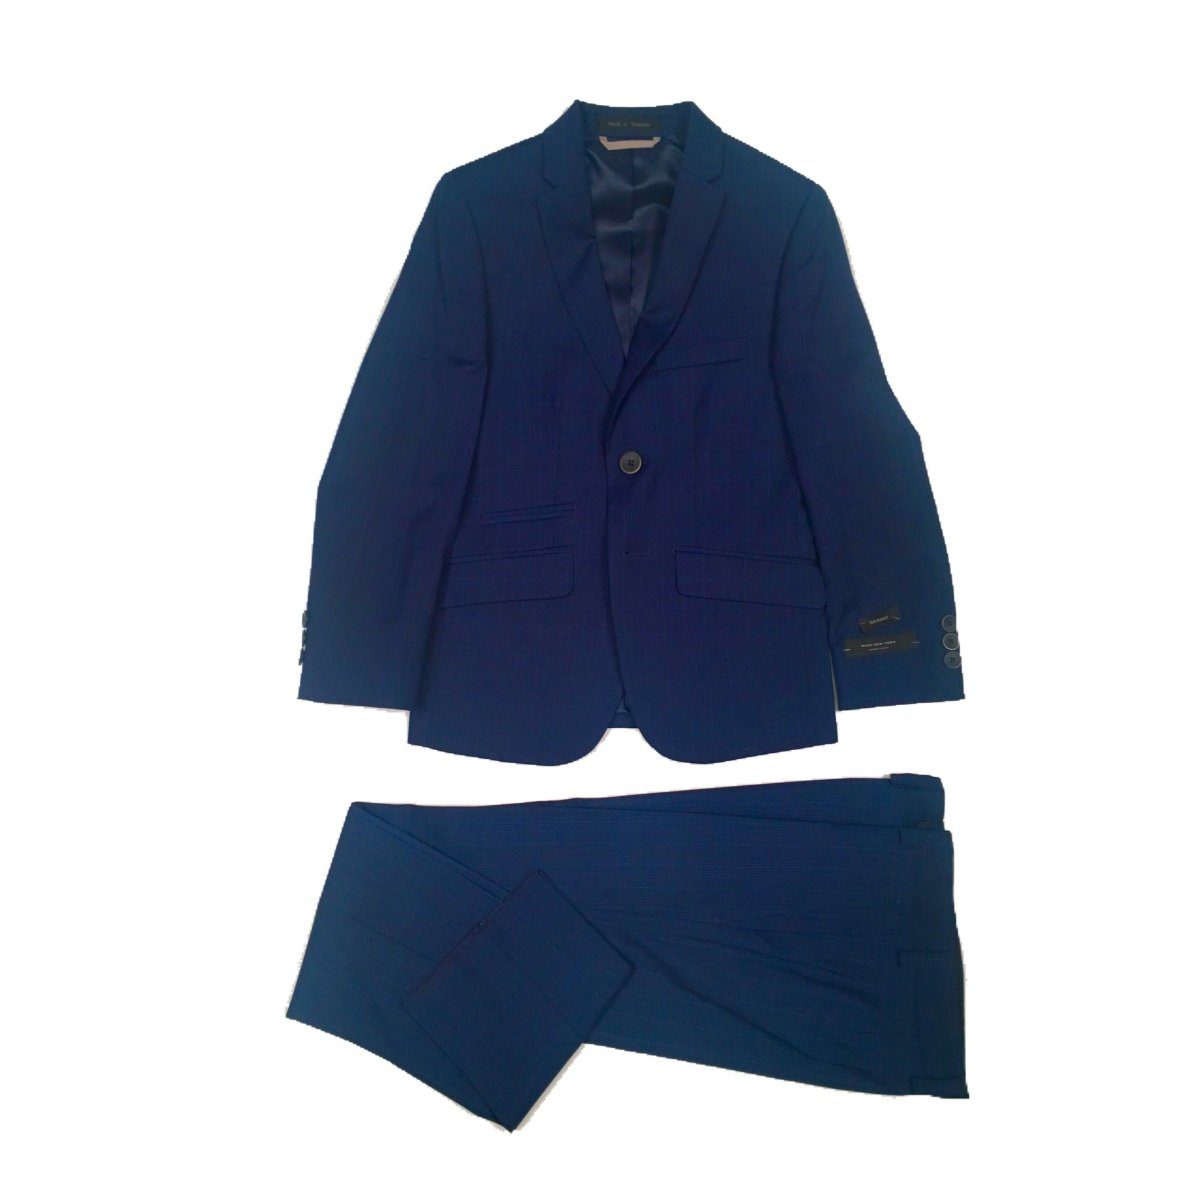 Marc New York Boys Skinny Plaid Blue Suit W0480 Suits (Boys) Marc New York 